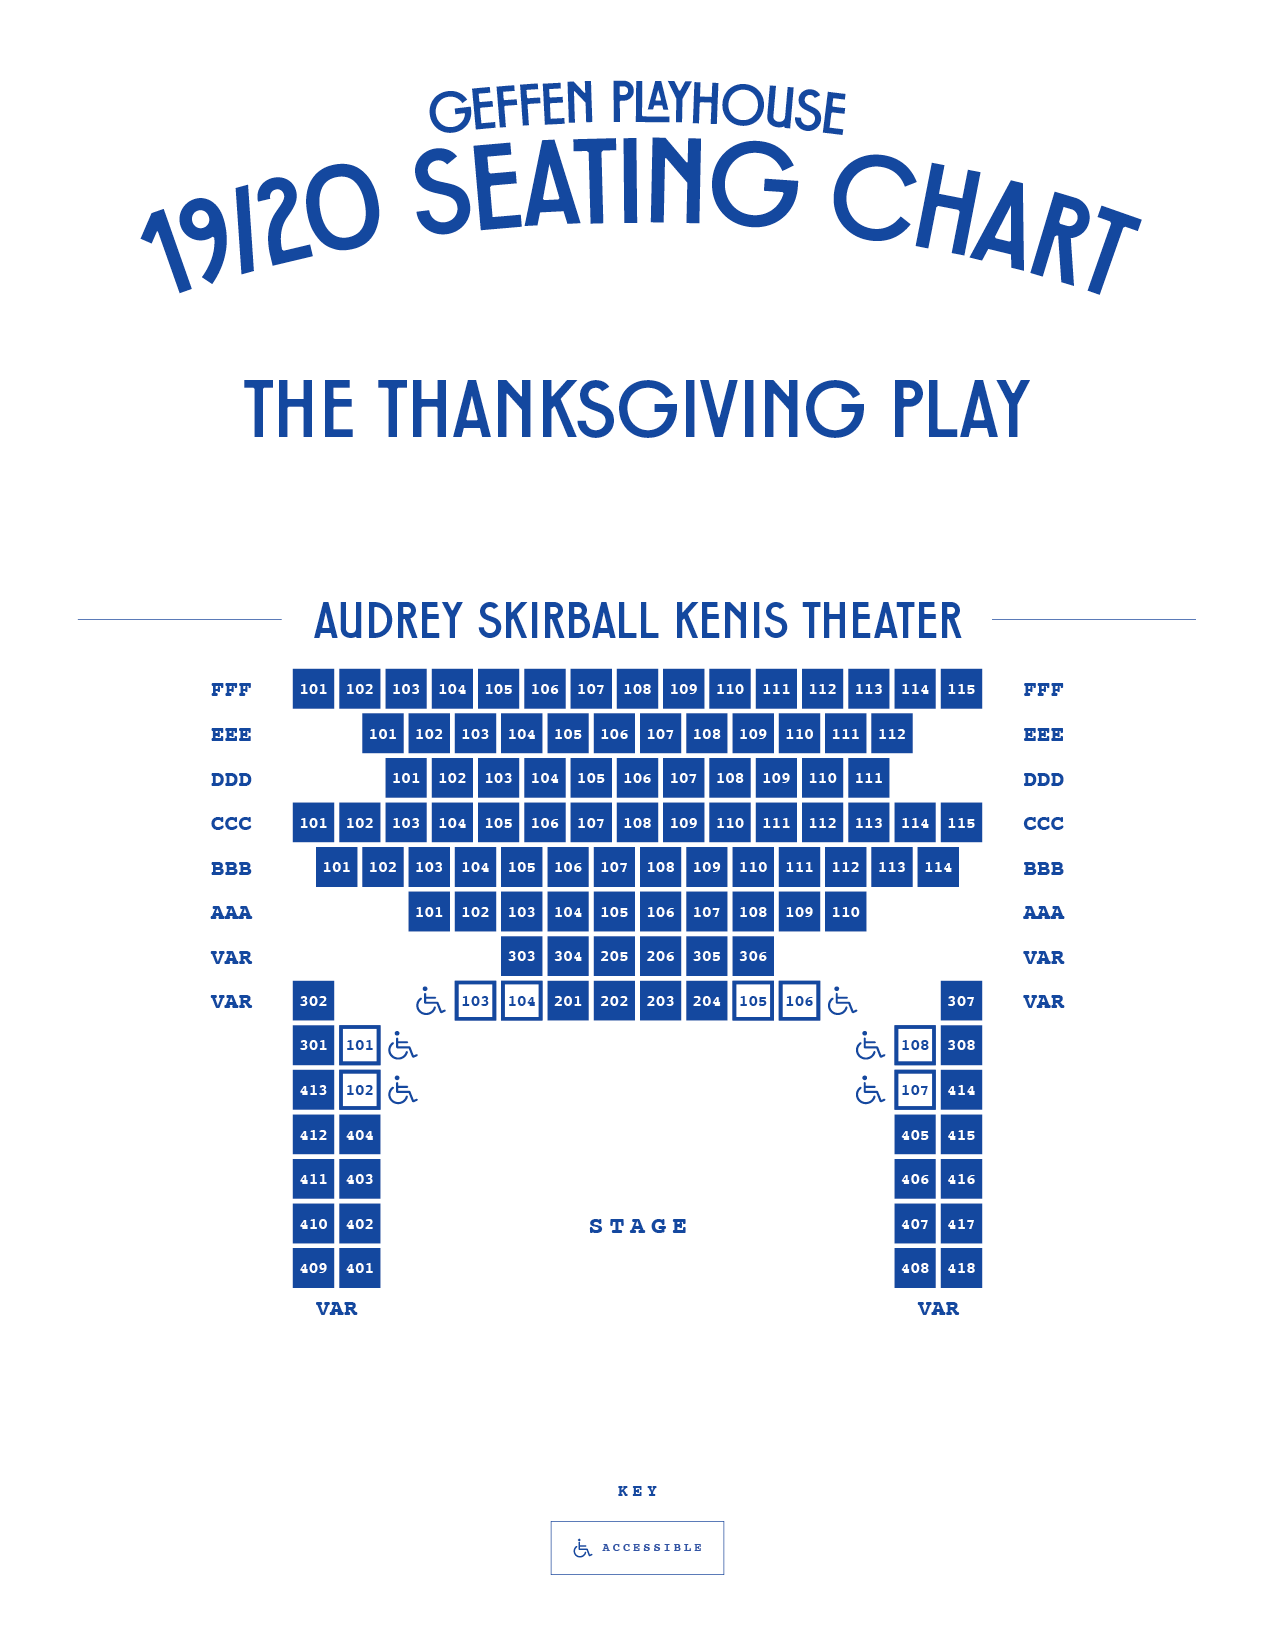 Geffen Playhouse Theater Seating Charts | Geffen Playhouse